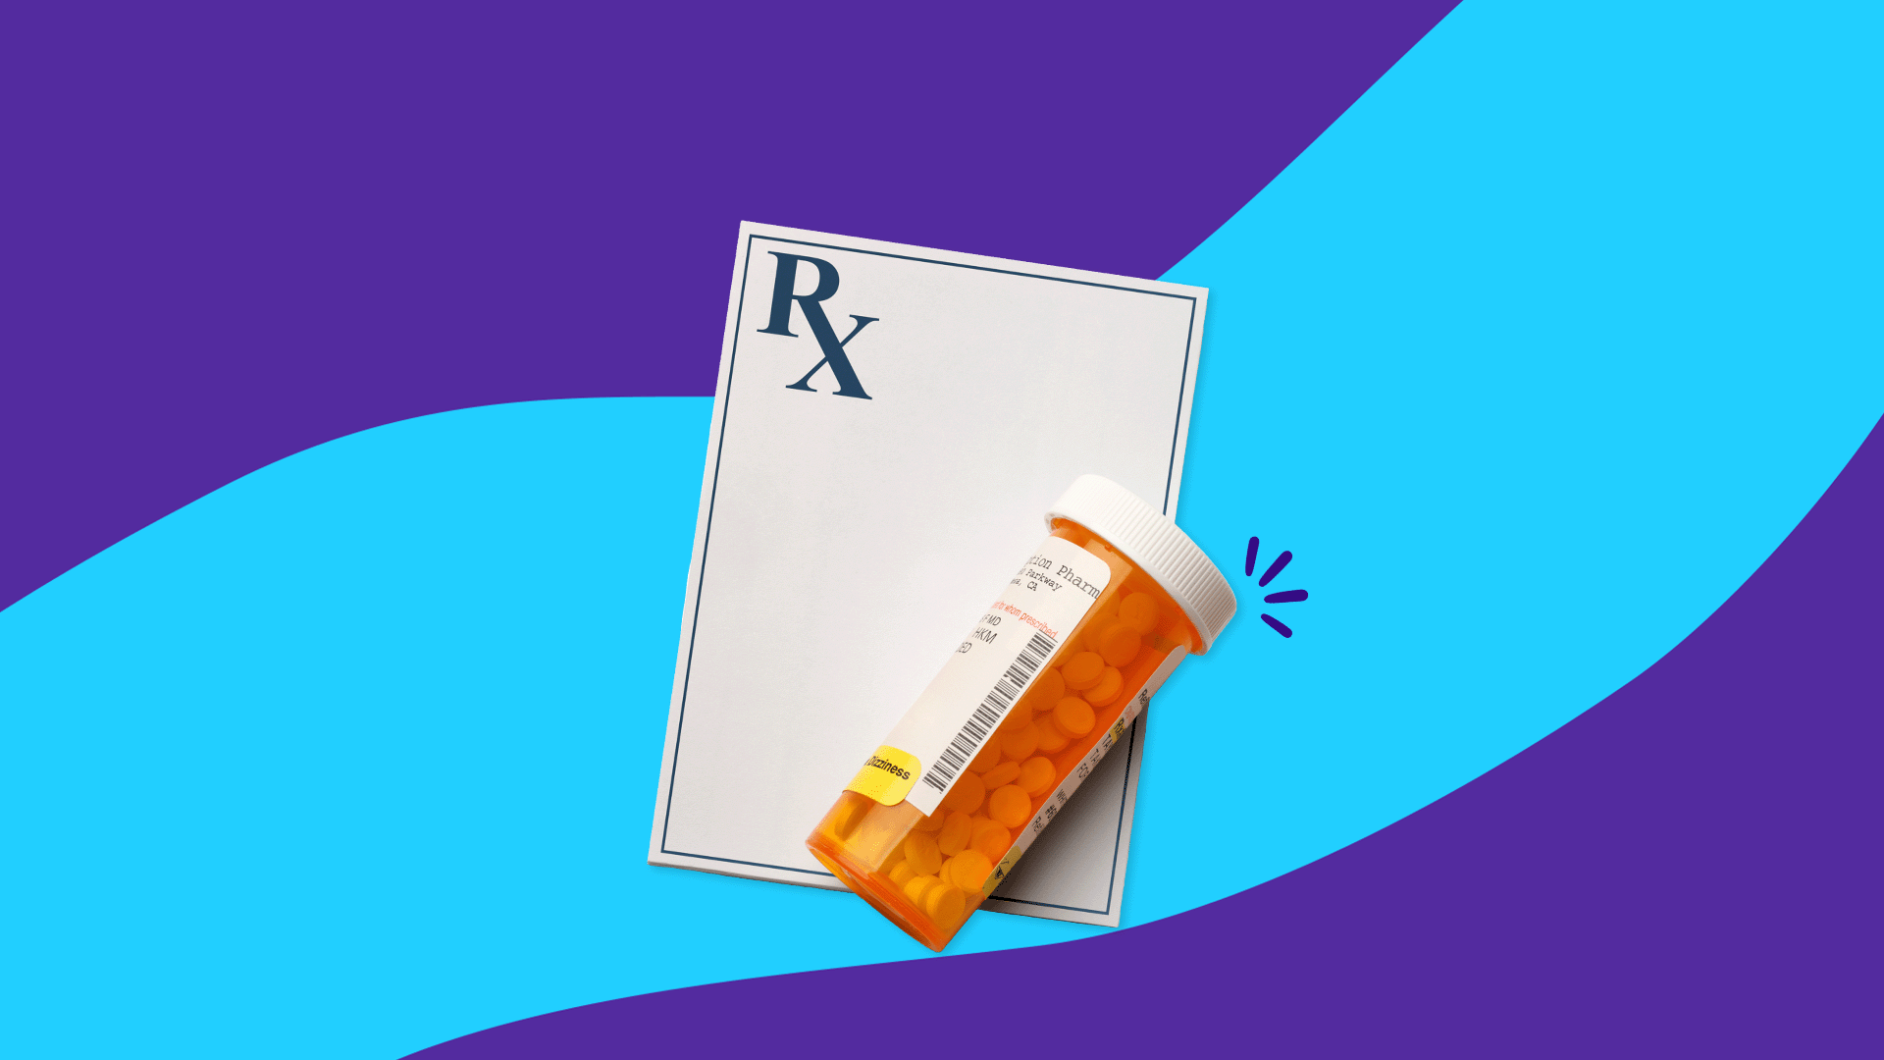 What are quantity limits for prescription drugs?